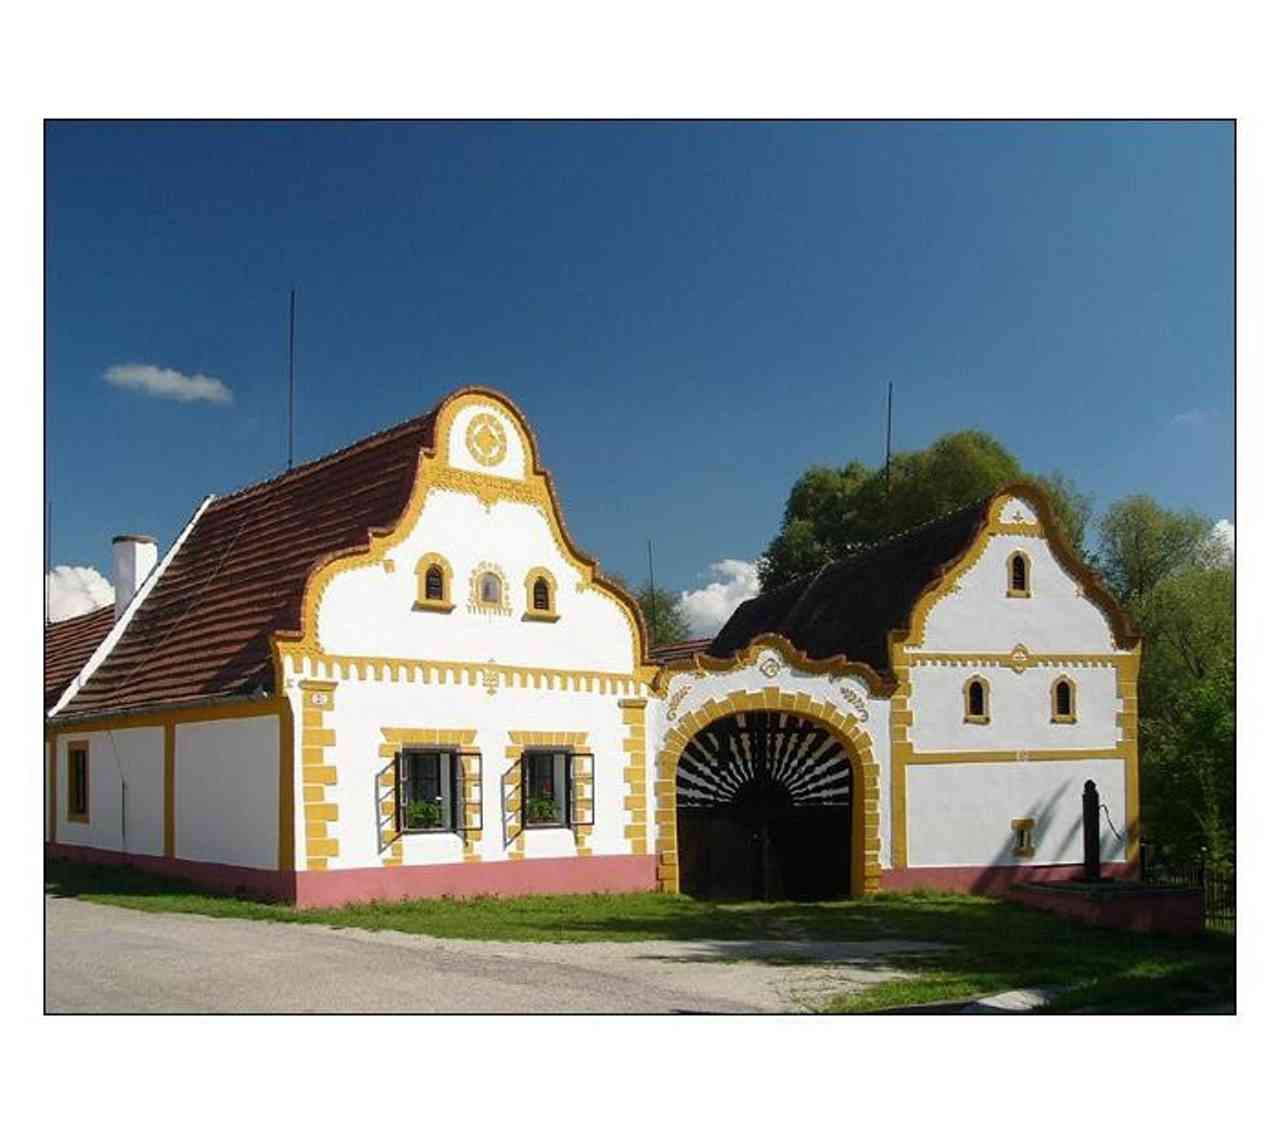 Hluboká nad Vltavou - Bavorovice - Bauernbarock